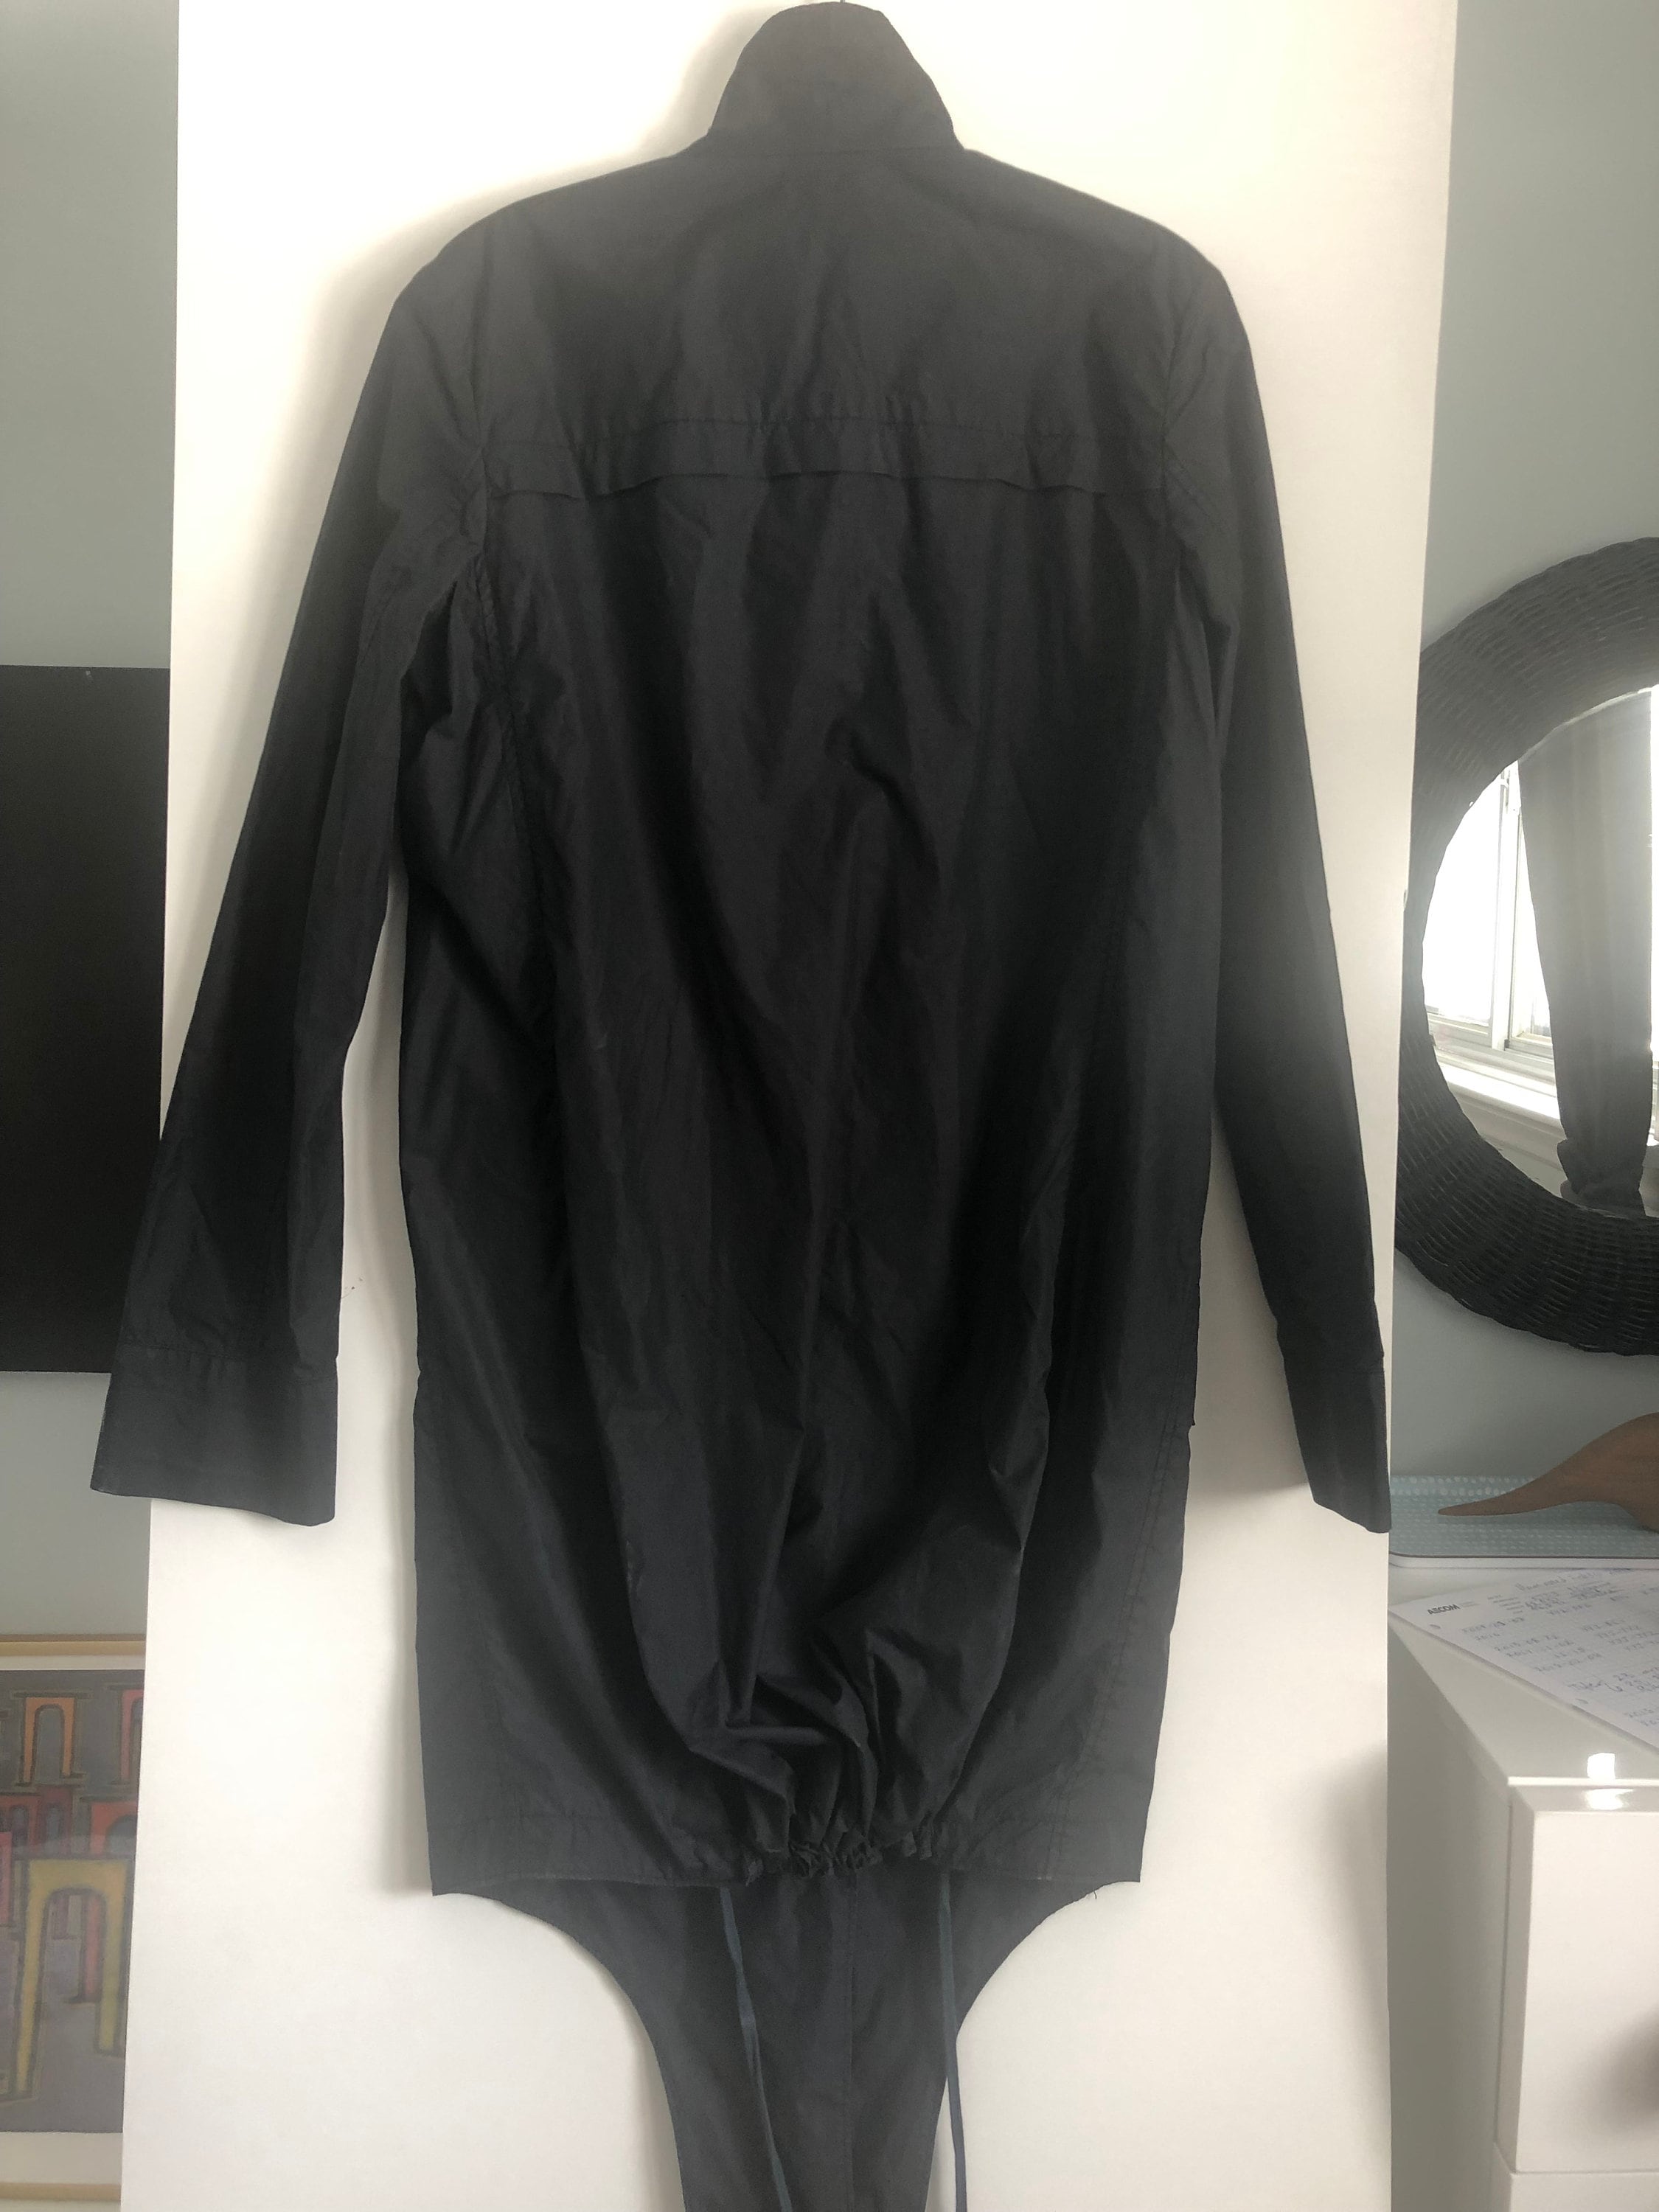 Vintage HELMUT LANG cotton long black lightweight unisex jacket size S